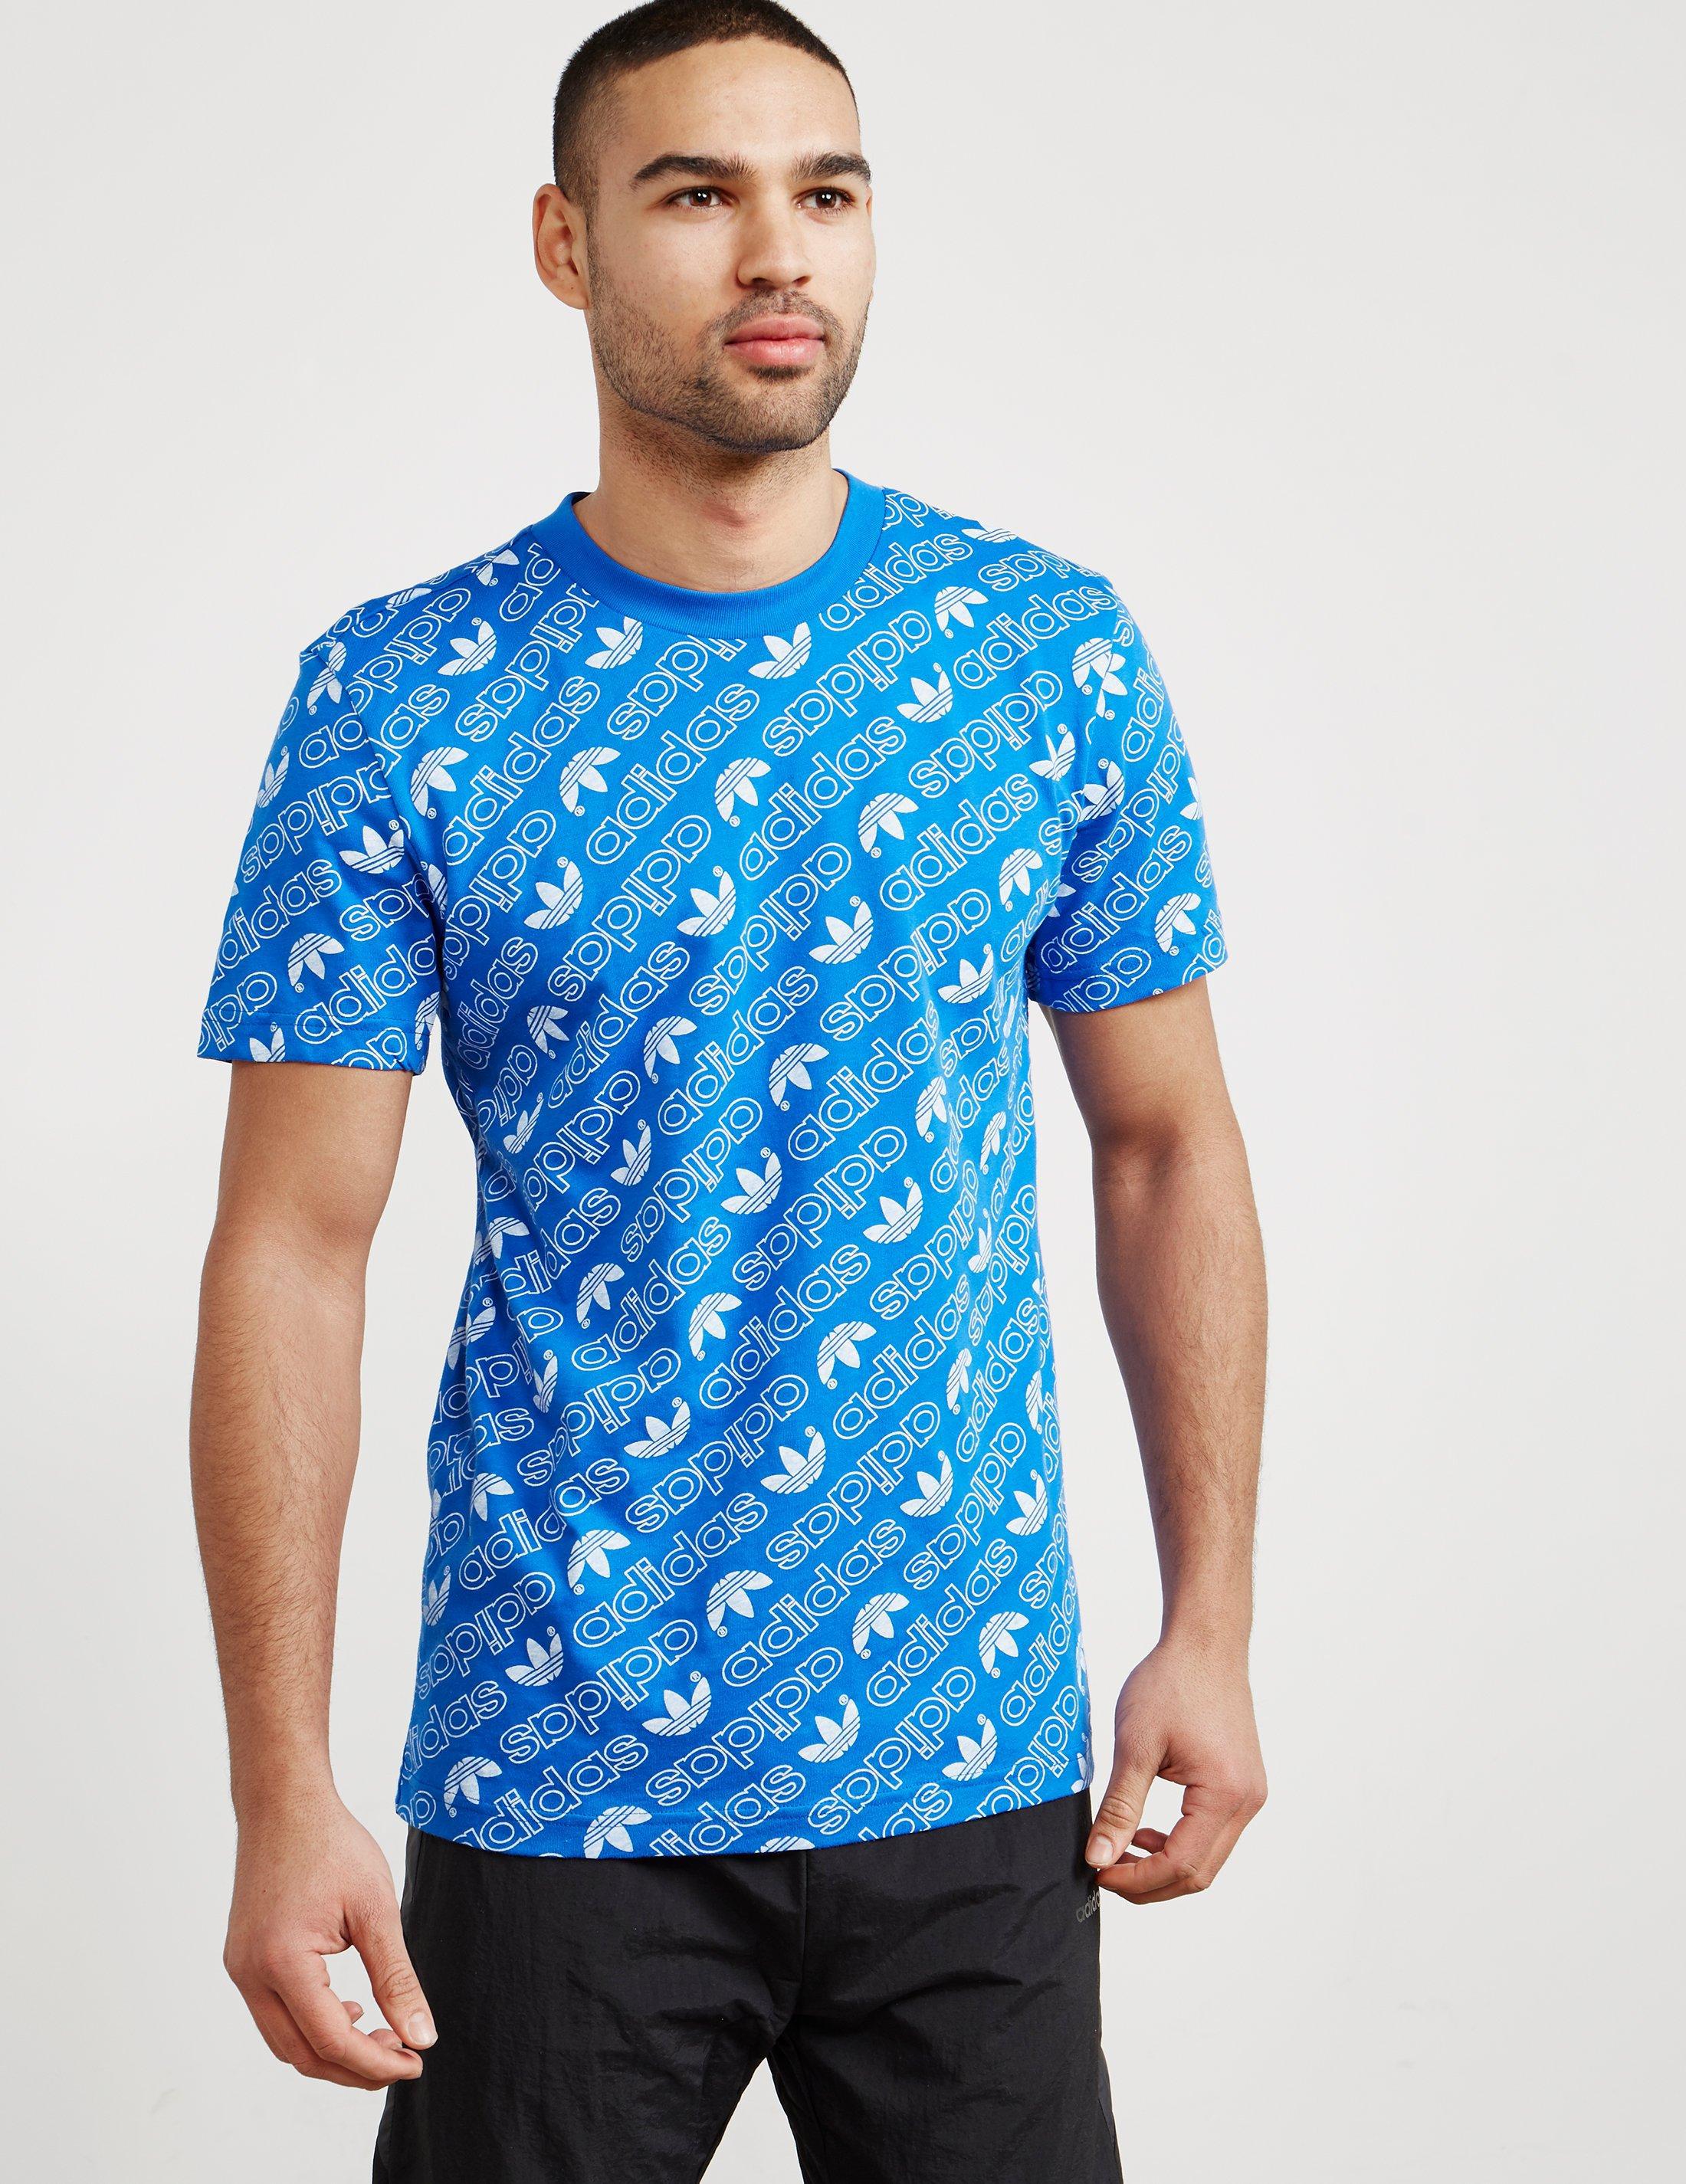 adidas Originals Mens All Over Print T-shirt Blue/white for Men - Lyst